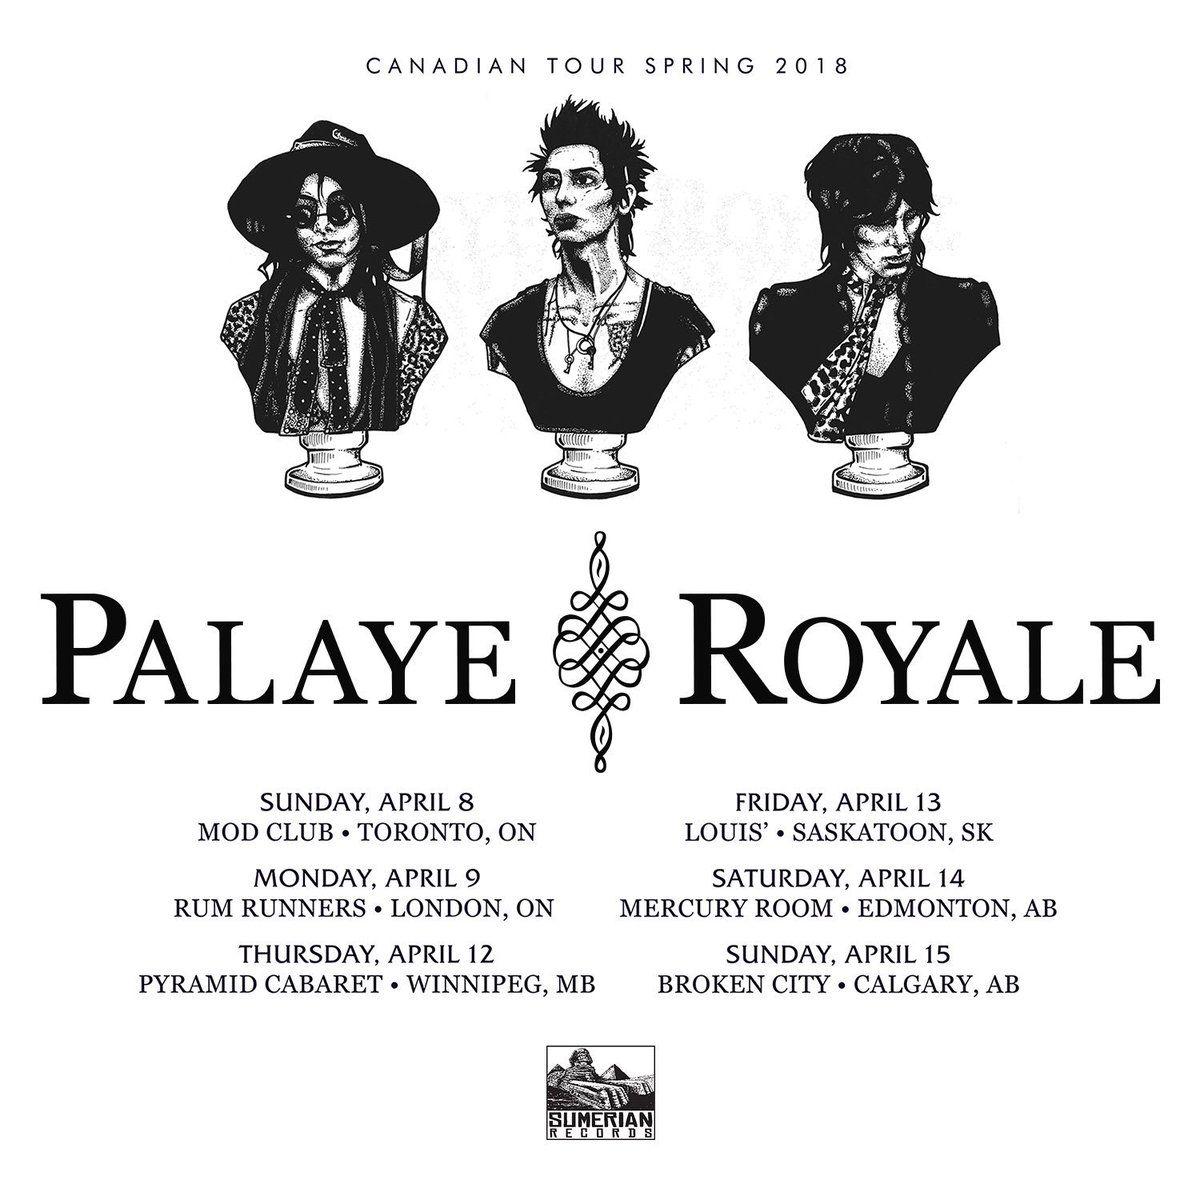 Palaye Royale Logo - Palaye Royale has sold out. Toronto